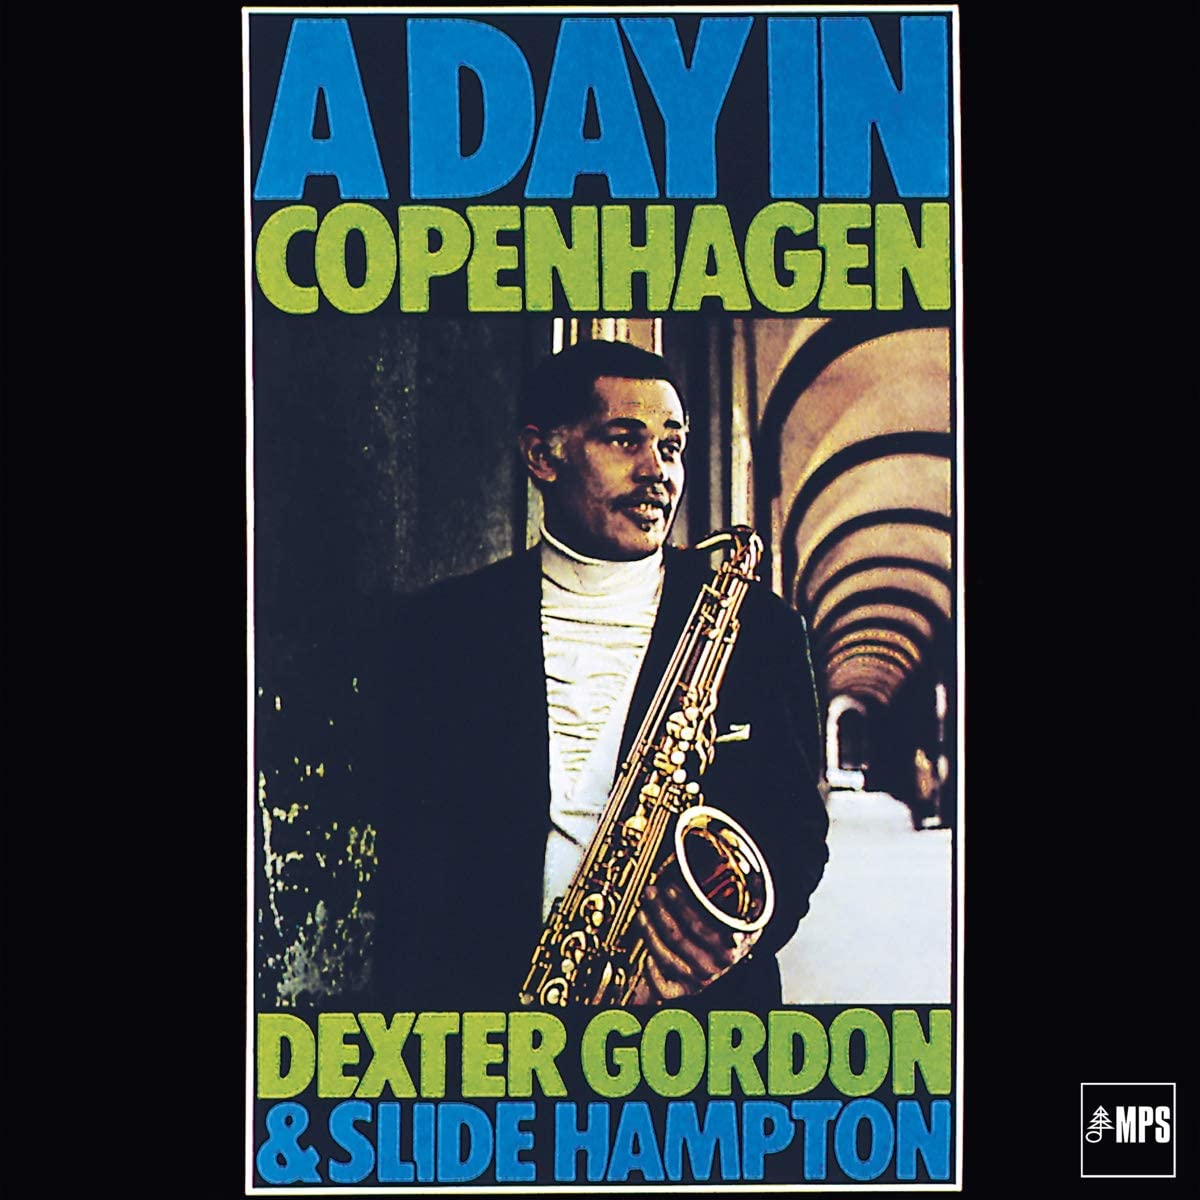 Dexter Gordon & Slide Hampton - A Day In Copenhagen - LP